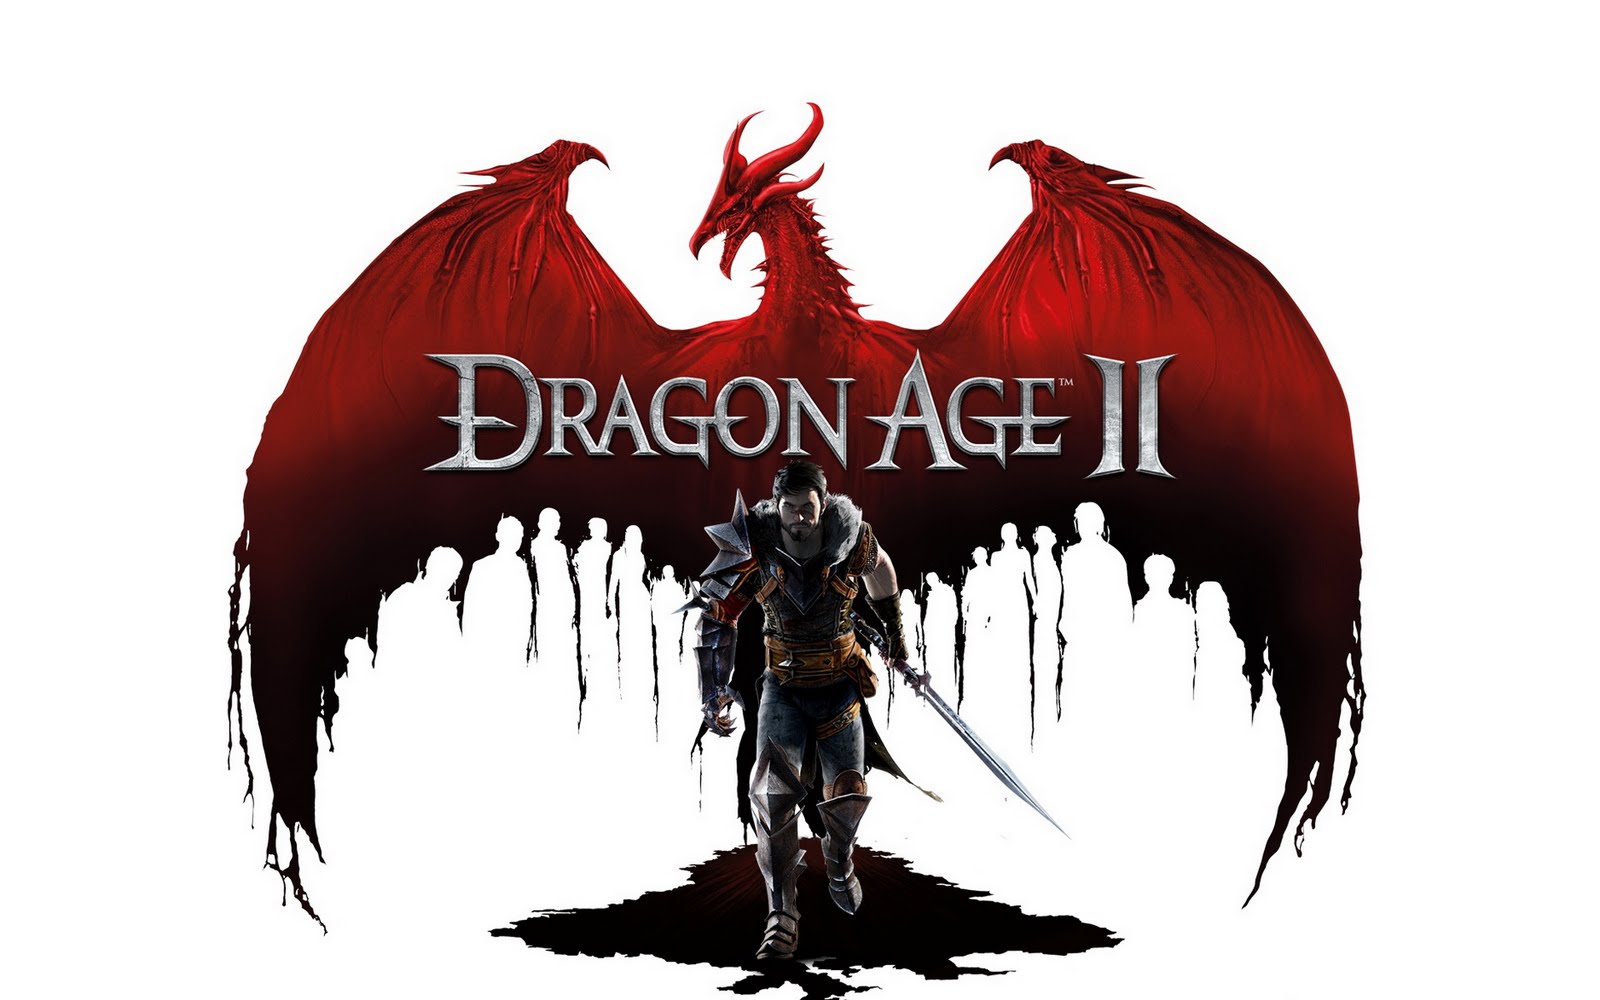 http://2.bp.blogspot.com/-0Gv0SXBd6kc/Ti0HiqB4bdI/AAAAAAAAAQs/CNJeTc1FbwM/s1600/dragon_age_ii_2011_game-wide-GAMESCAY.jpg